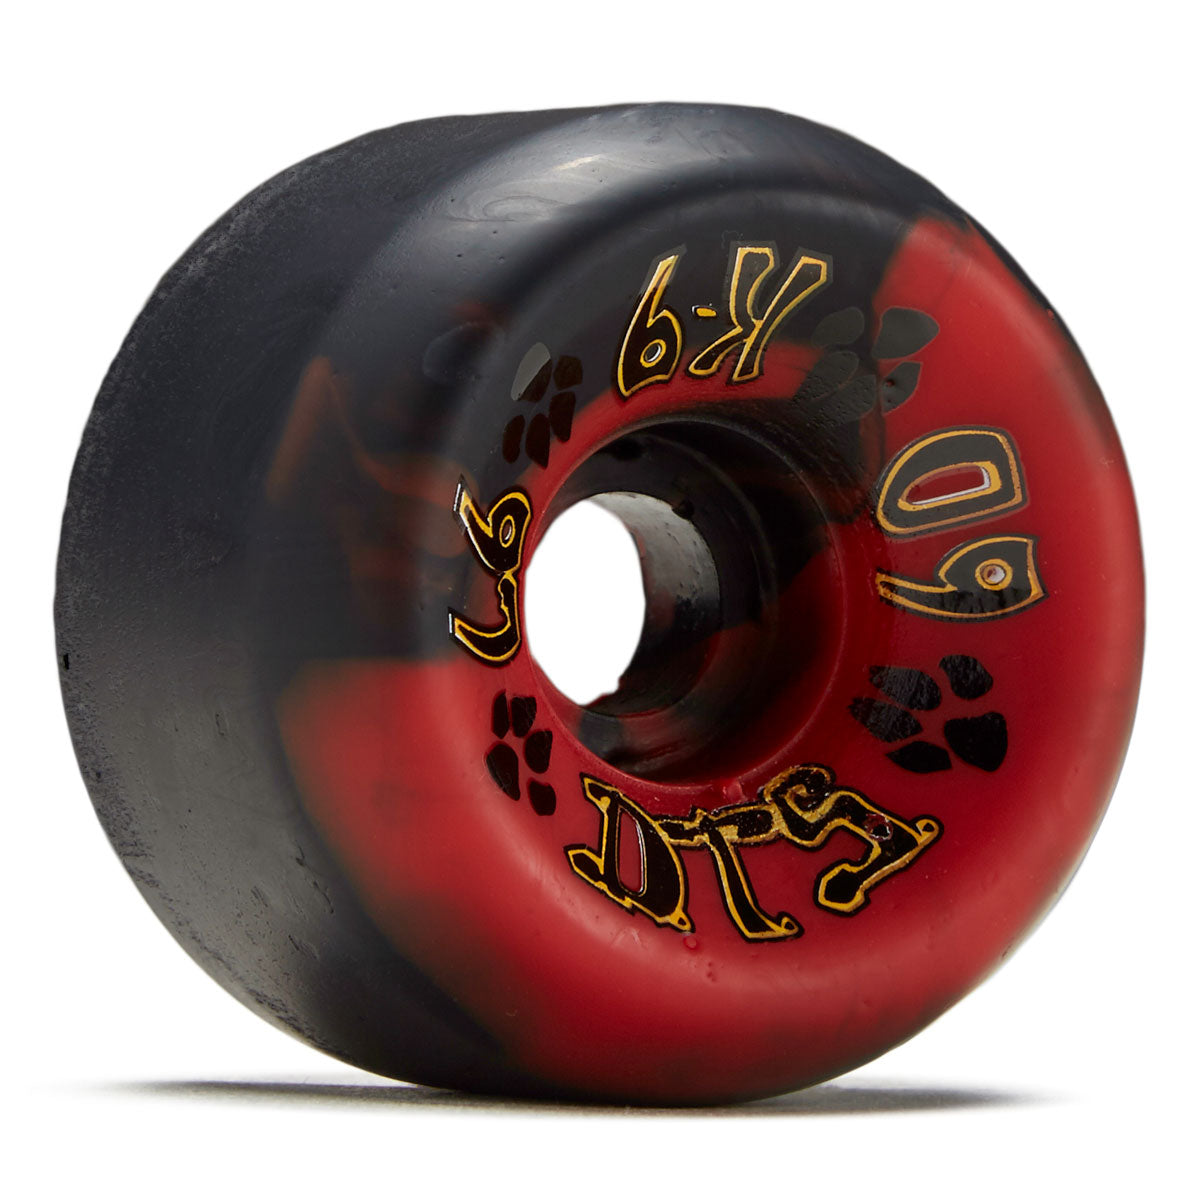 Dogtown K-9 97a Skateboard Wheels - Red/Black Swirl - 60mm image 1